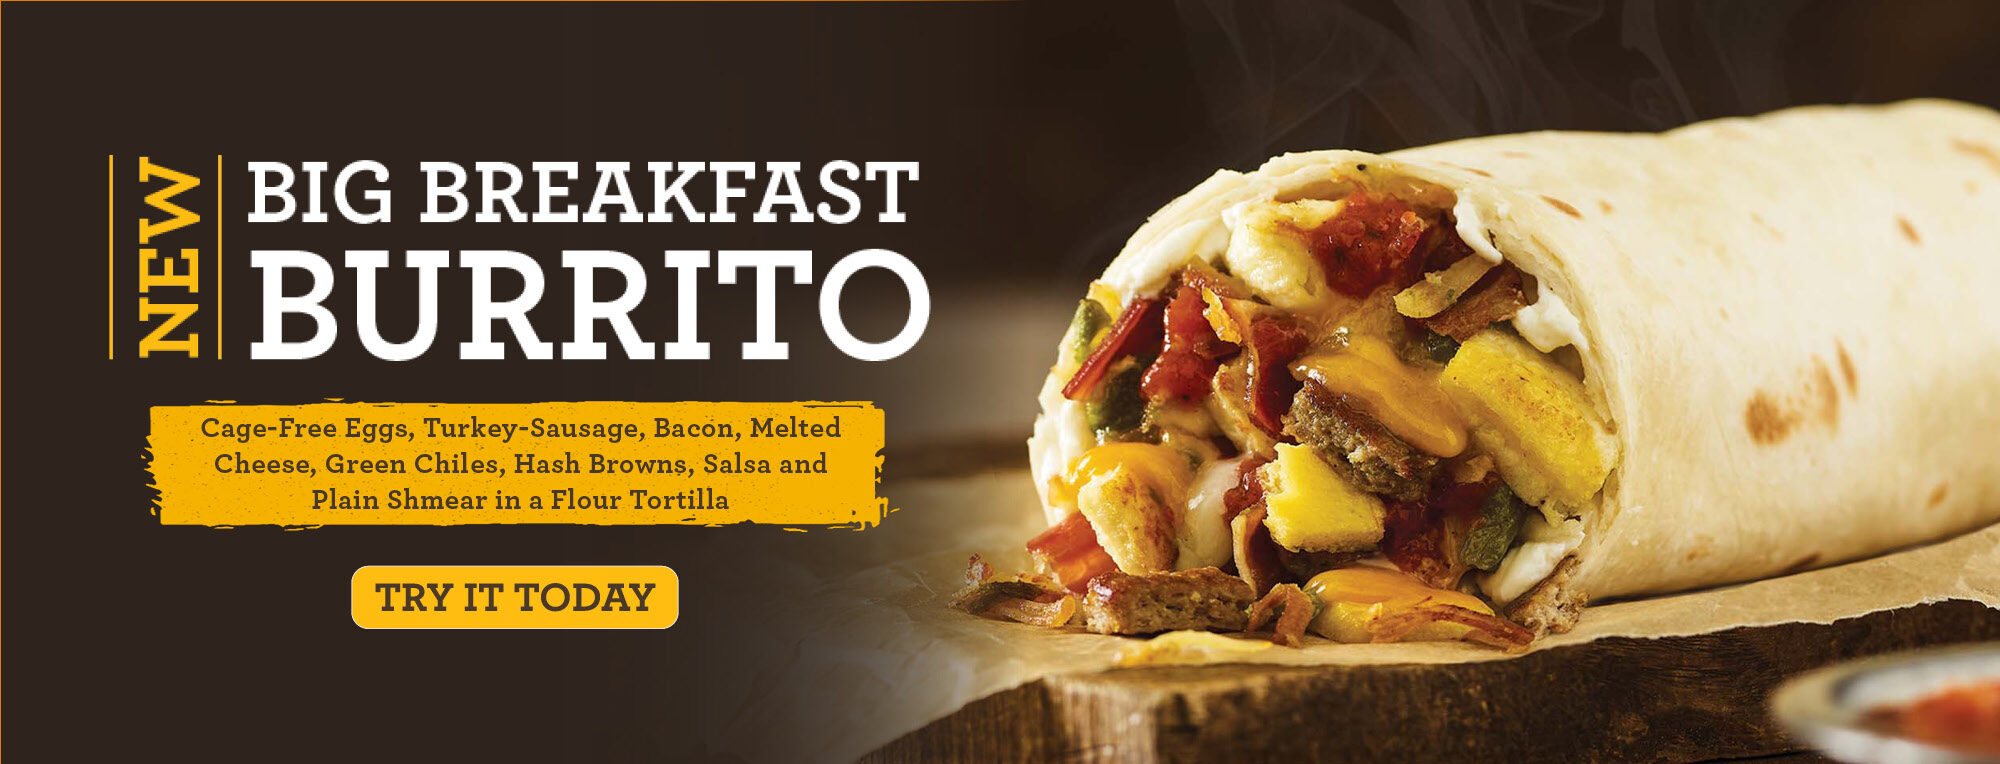 The New Big Breakfast Burrito from Einstein Bros. Bagels